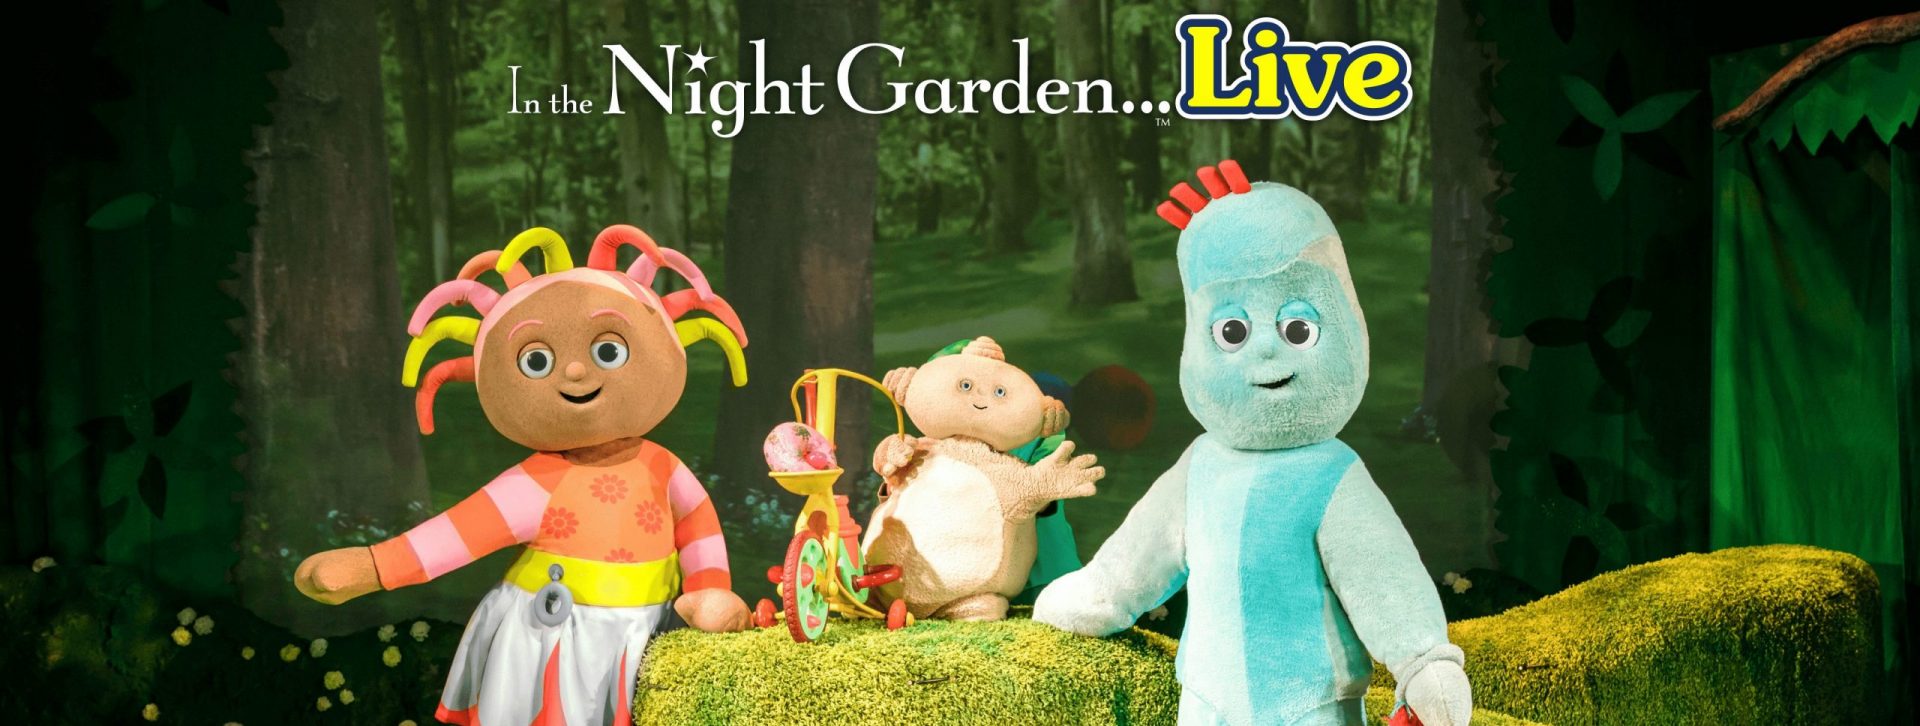 In The Night Garden Live!